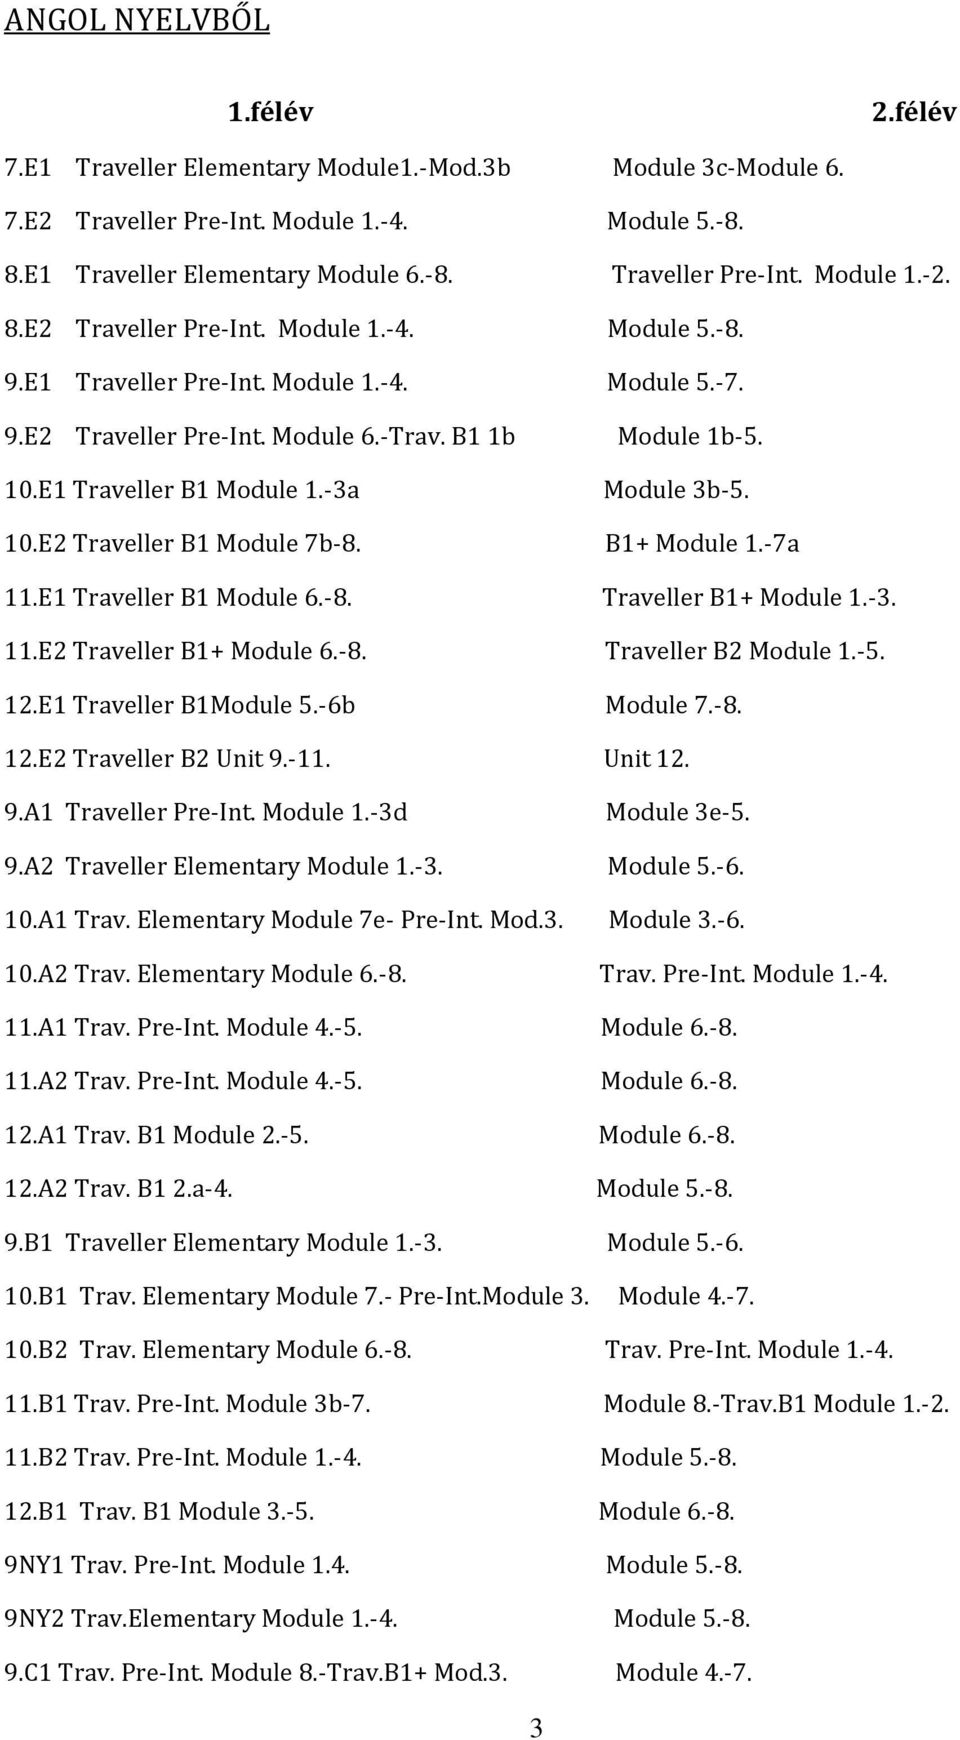 -3a Module 3b-5. 10.E2 Traveller B1 Module 7b-8. B1+ Module 1.-7a 11.E1 Traveller B1 Module 6.-8. Traveller B1+ Module 1.-3. 11.E2 Traveller B1+ Module 6.-8. Traveller B2 Module 1.-5. 12.